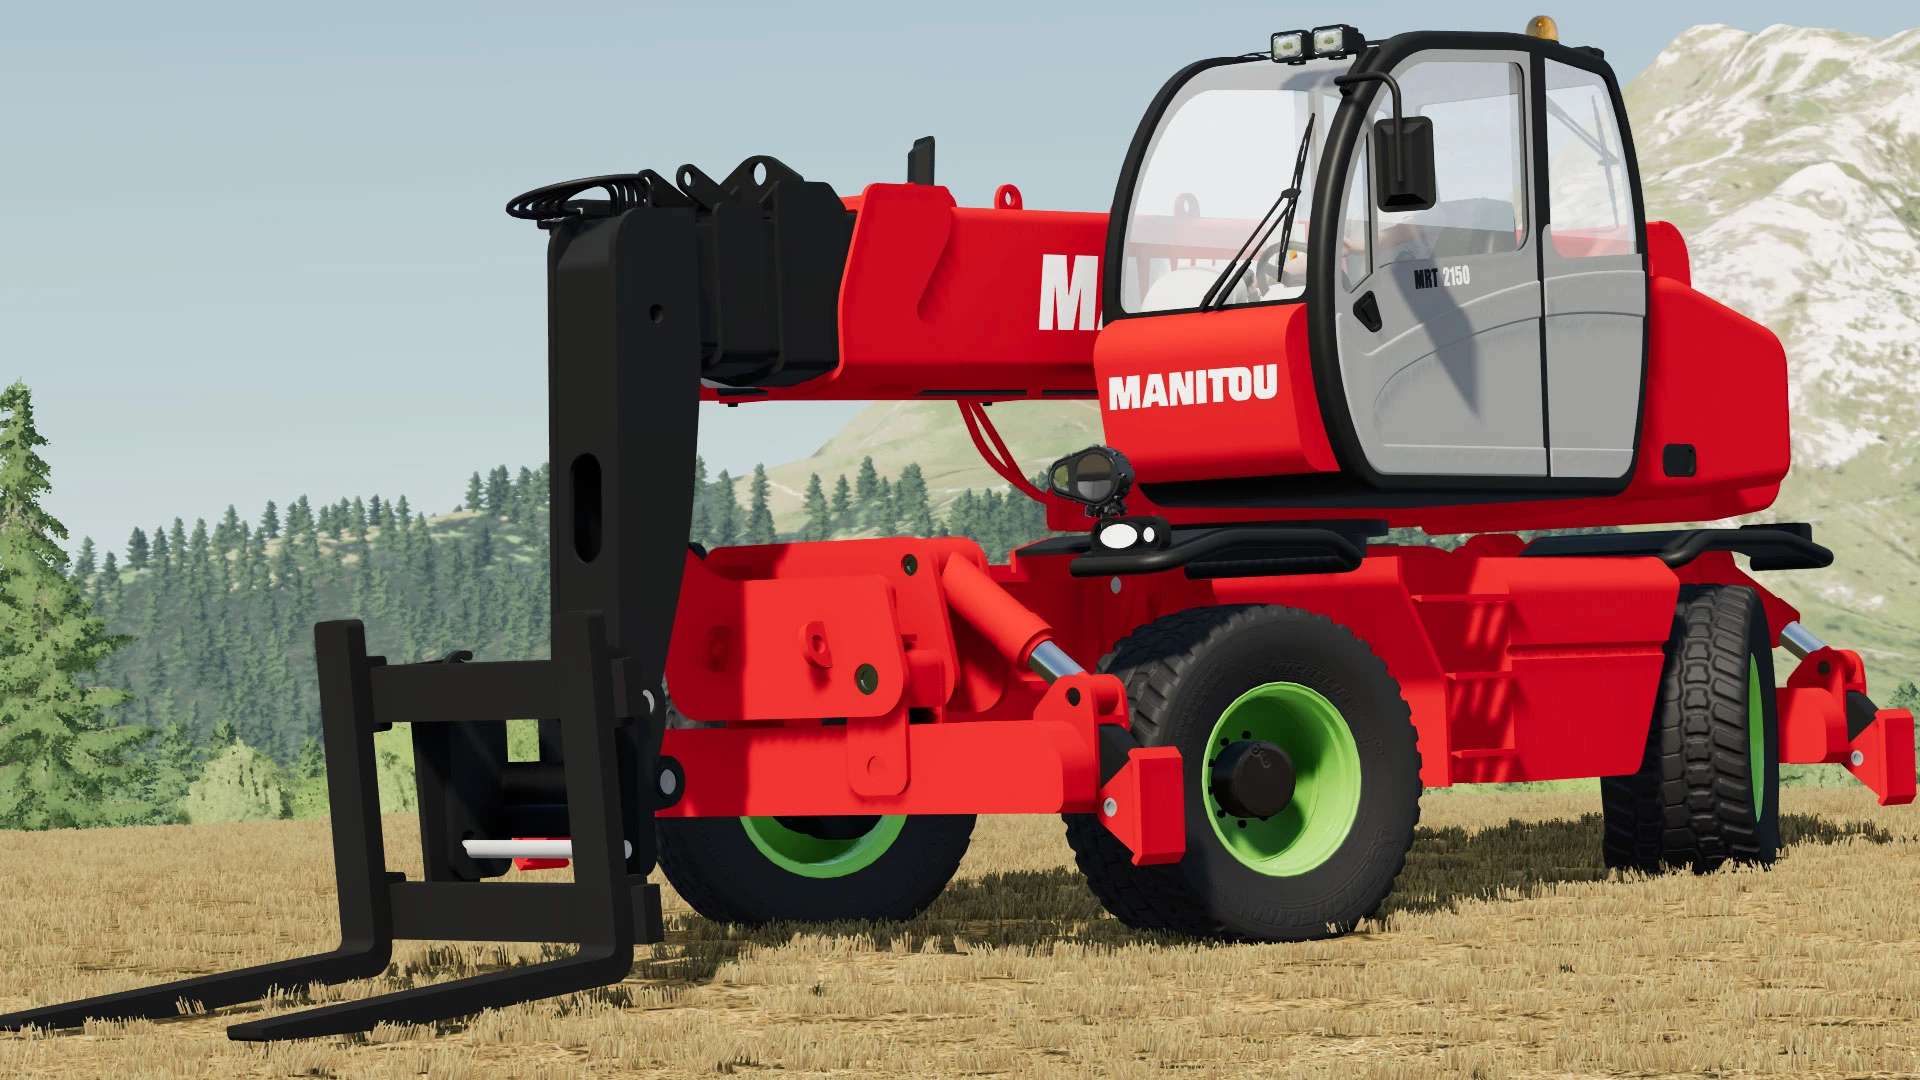 Manitou Mrt 2150 V10 Fs22 Farming Simulator 22 Mod Fs22 Mod 9691